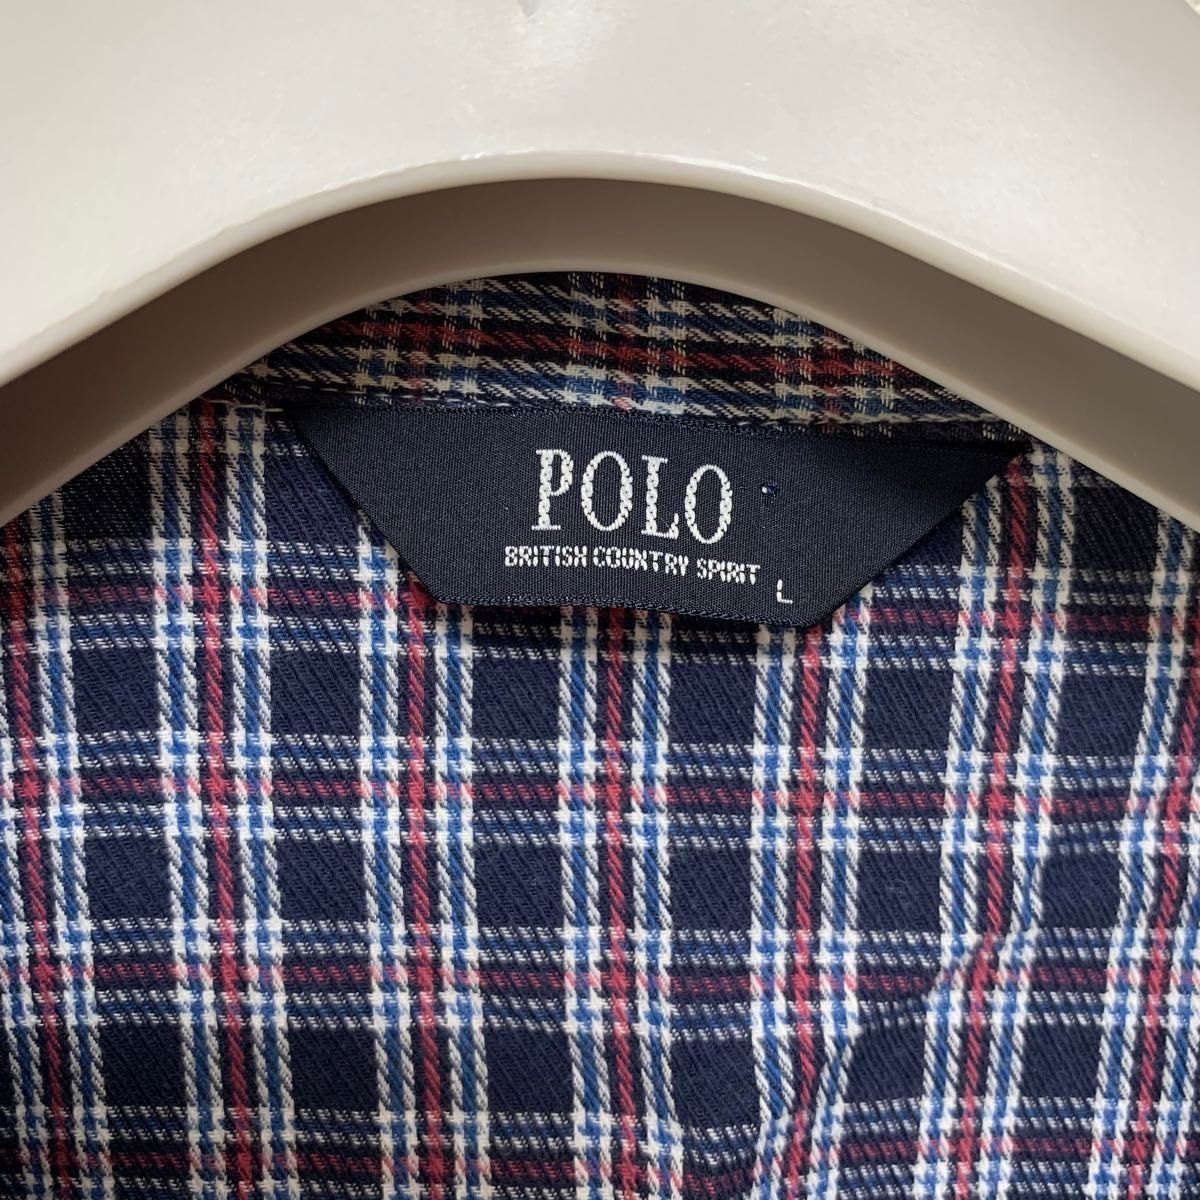 POLO BCS ポロブリティッシュカントリースピリット Lサイズ メンズ 紳士服 ルームウェア パジャマ 部屋着  コットン 綿